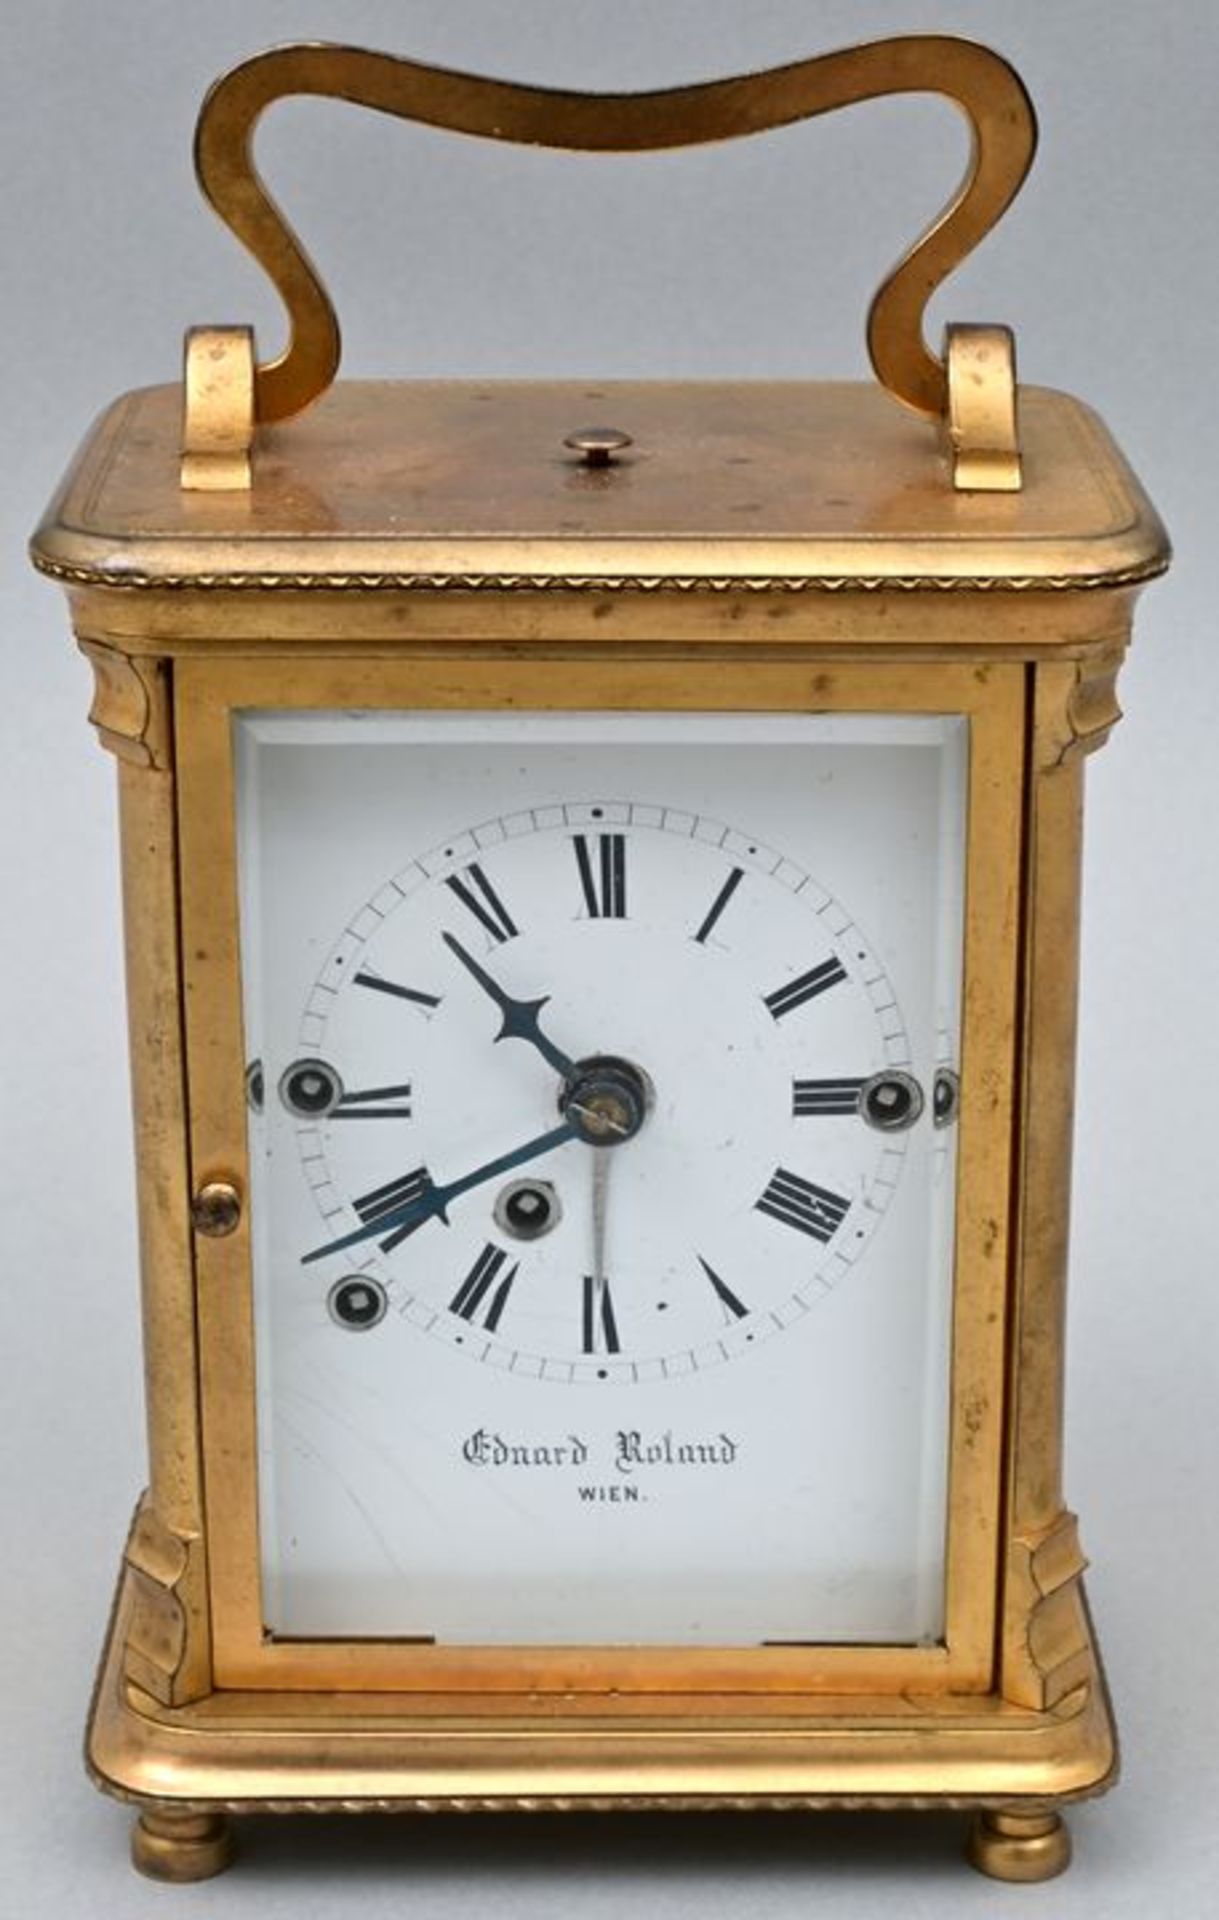 Reiseuhr Rpt., Eduard Roland, Wien / Travel clock